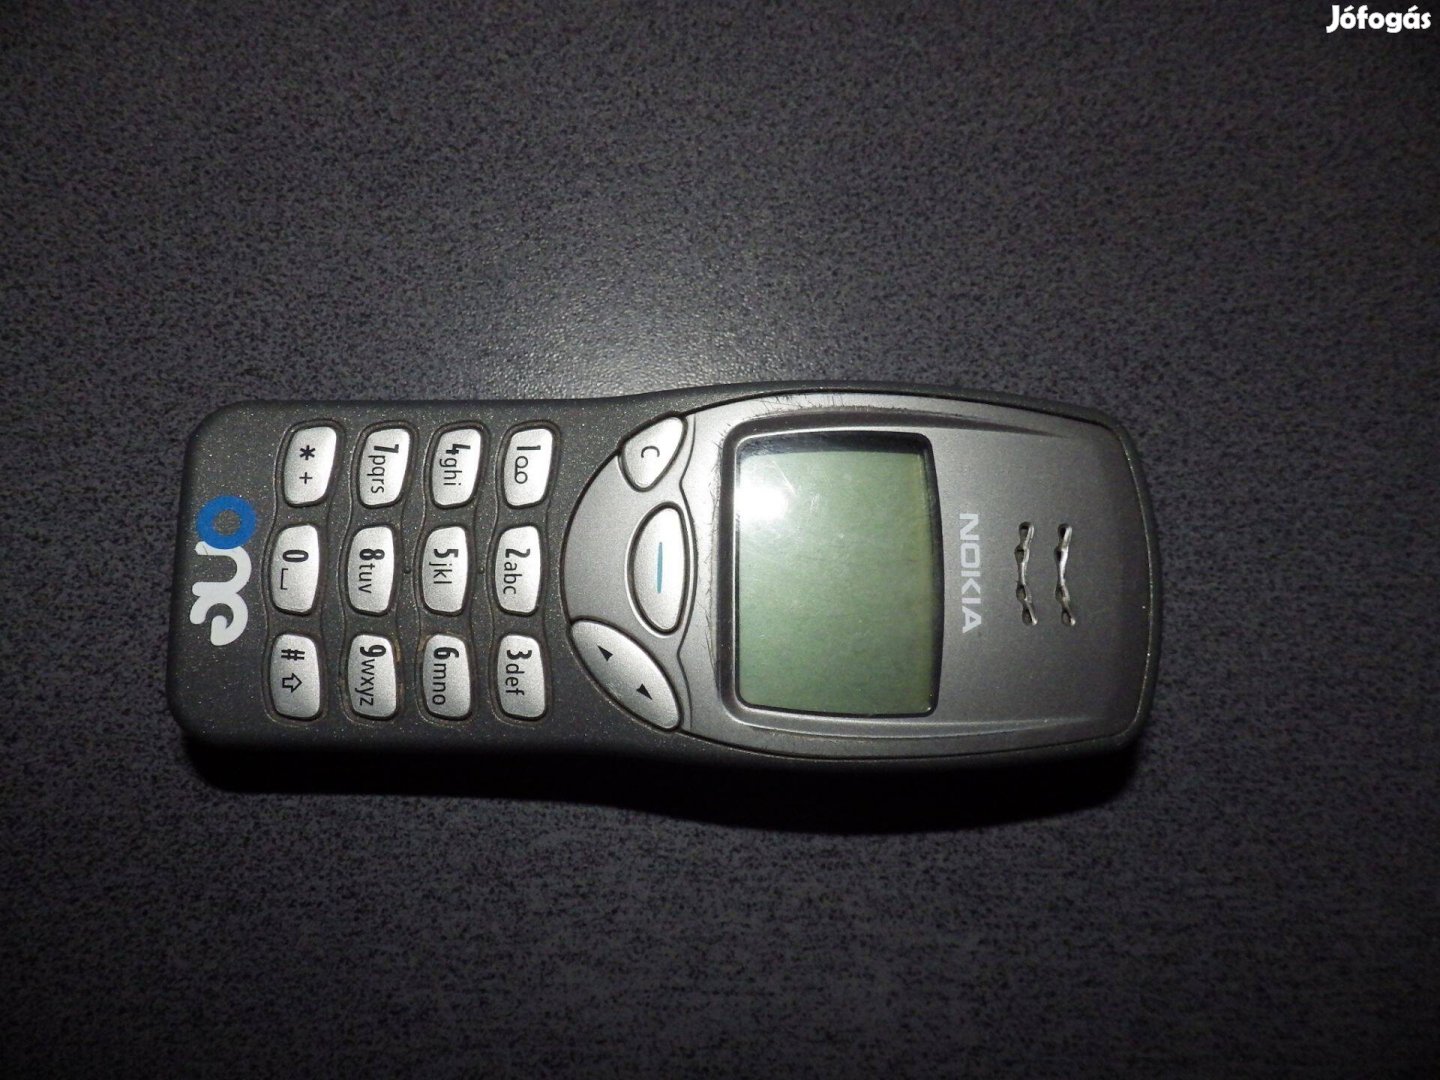 Nokia 3210 telefon